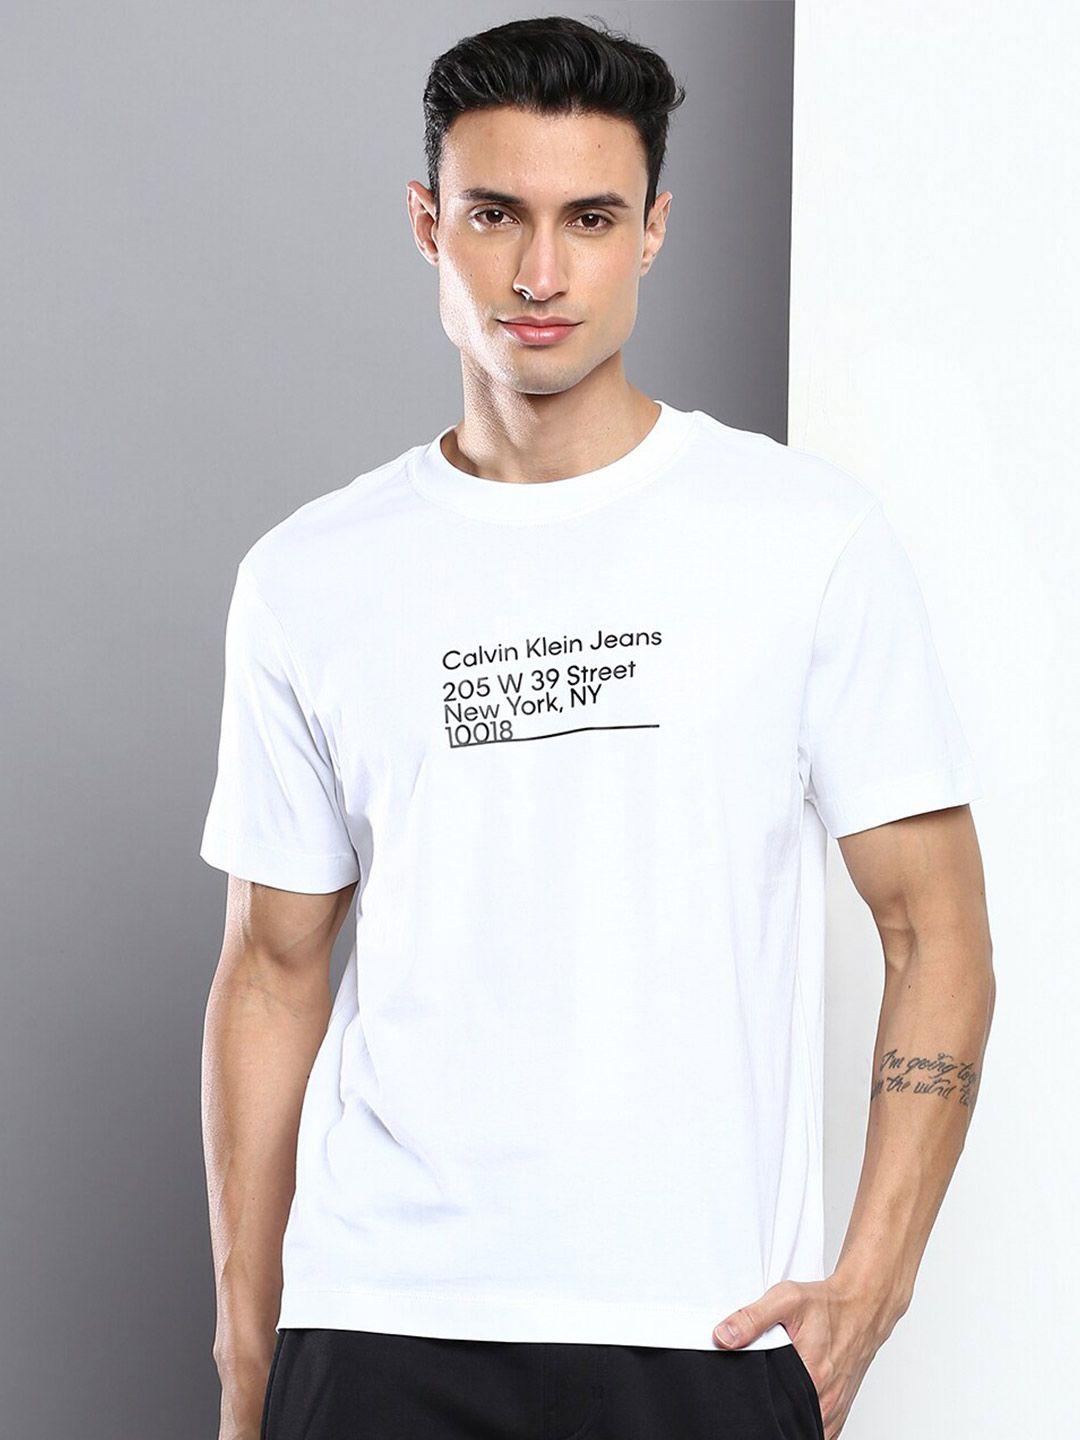 calvin-klein-jeans-men-typography-printed-t-shirt